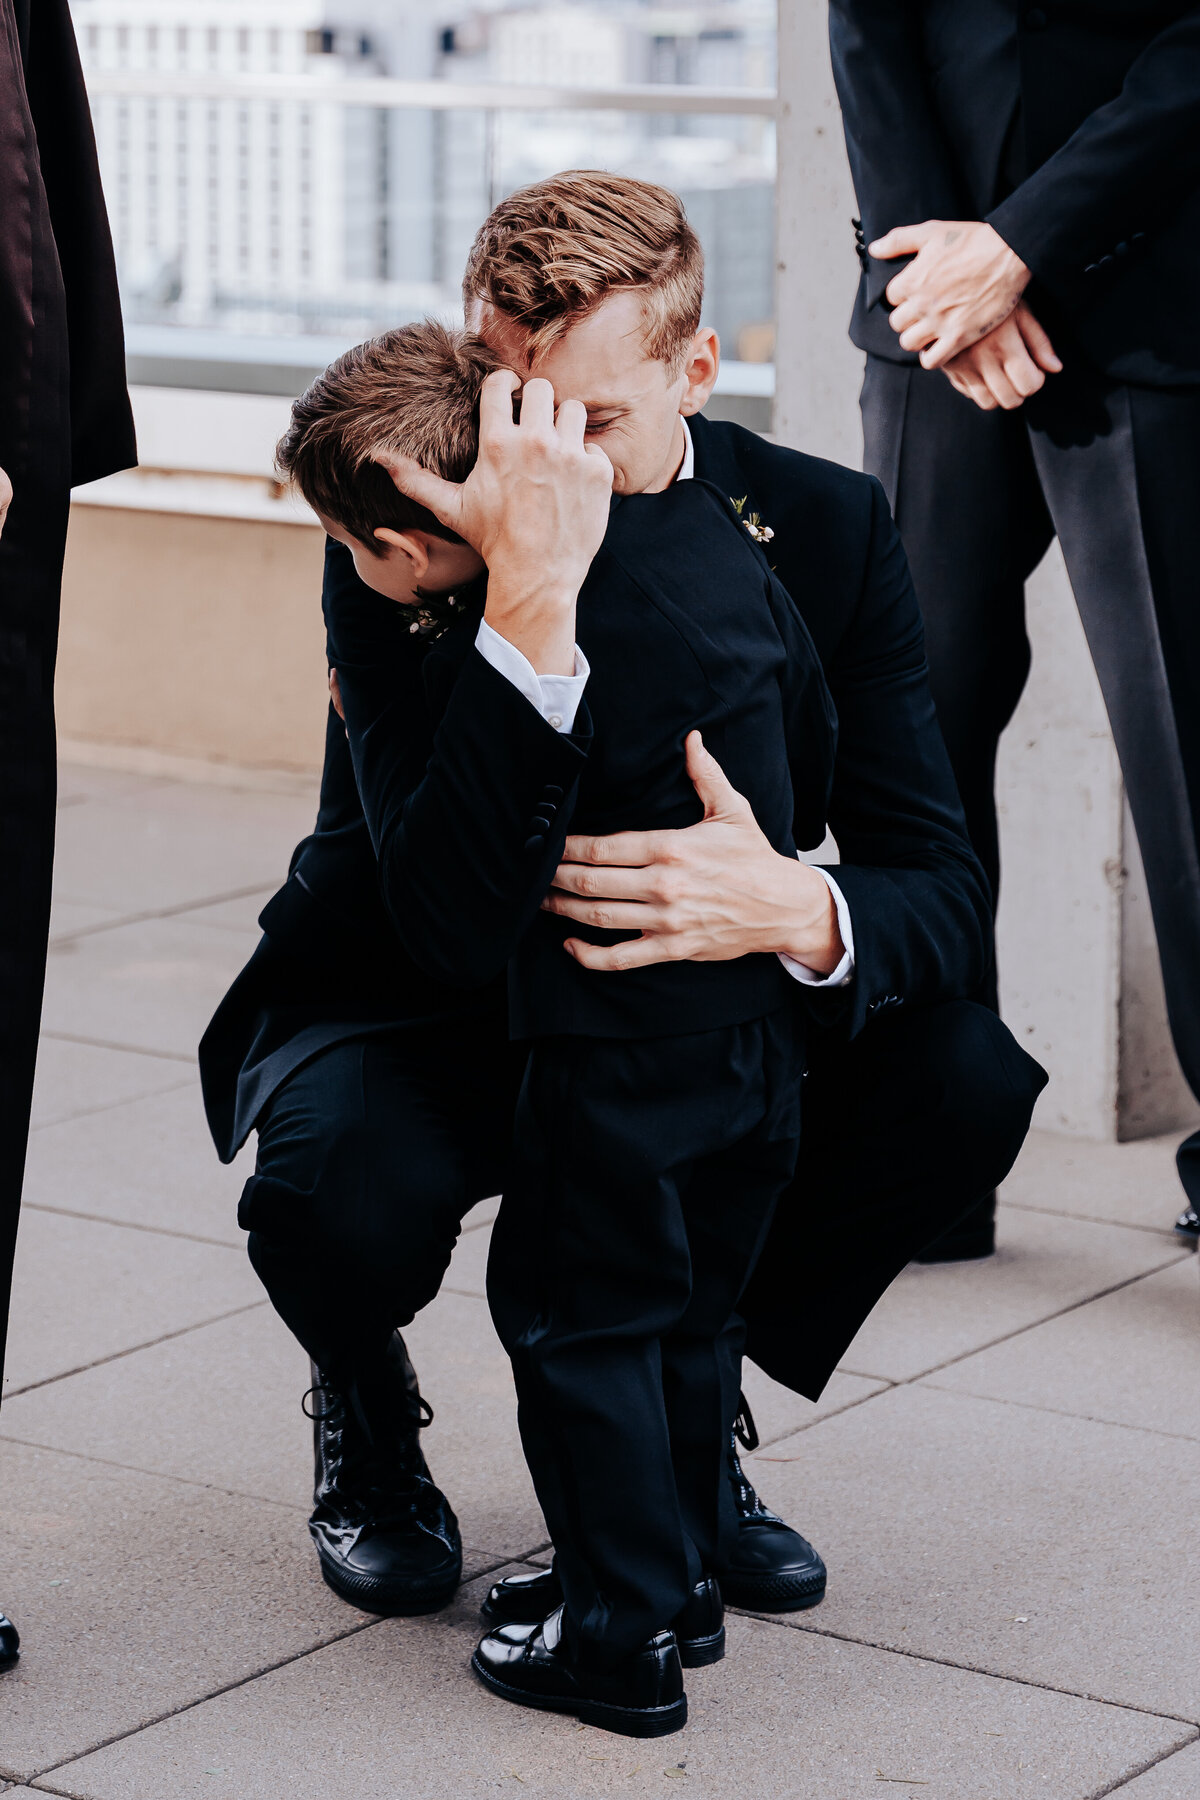 Nashville wedding photographer captures groom hugging son